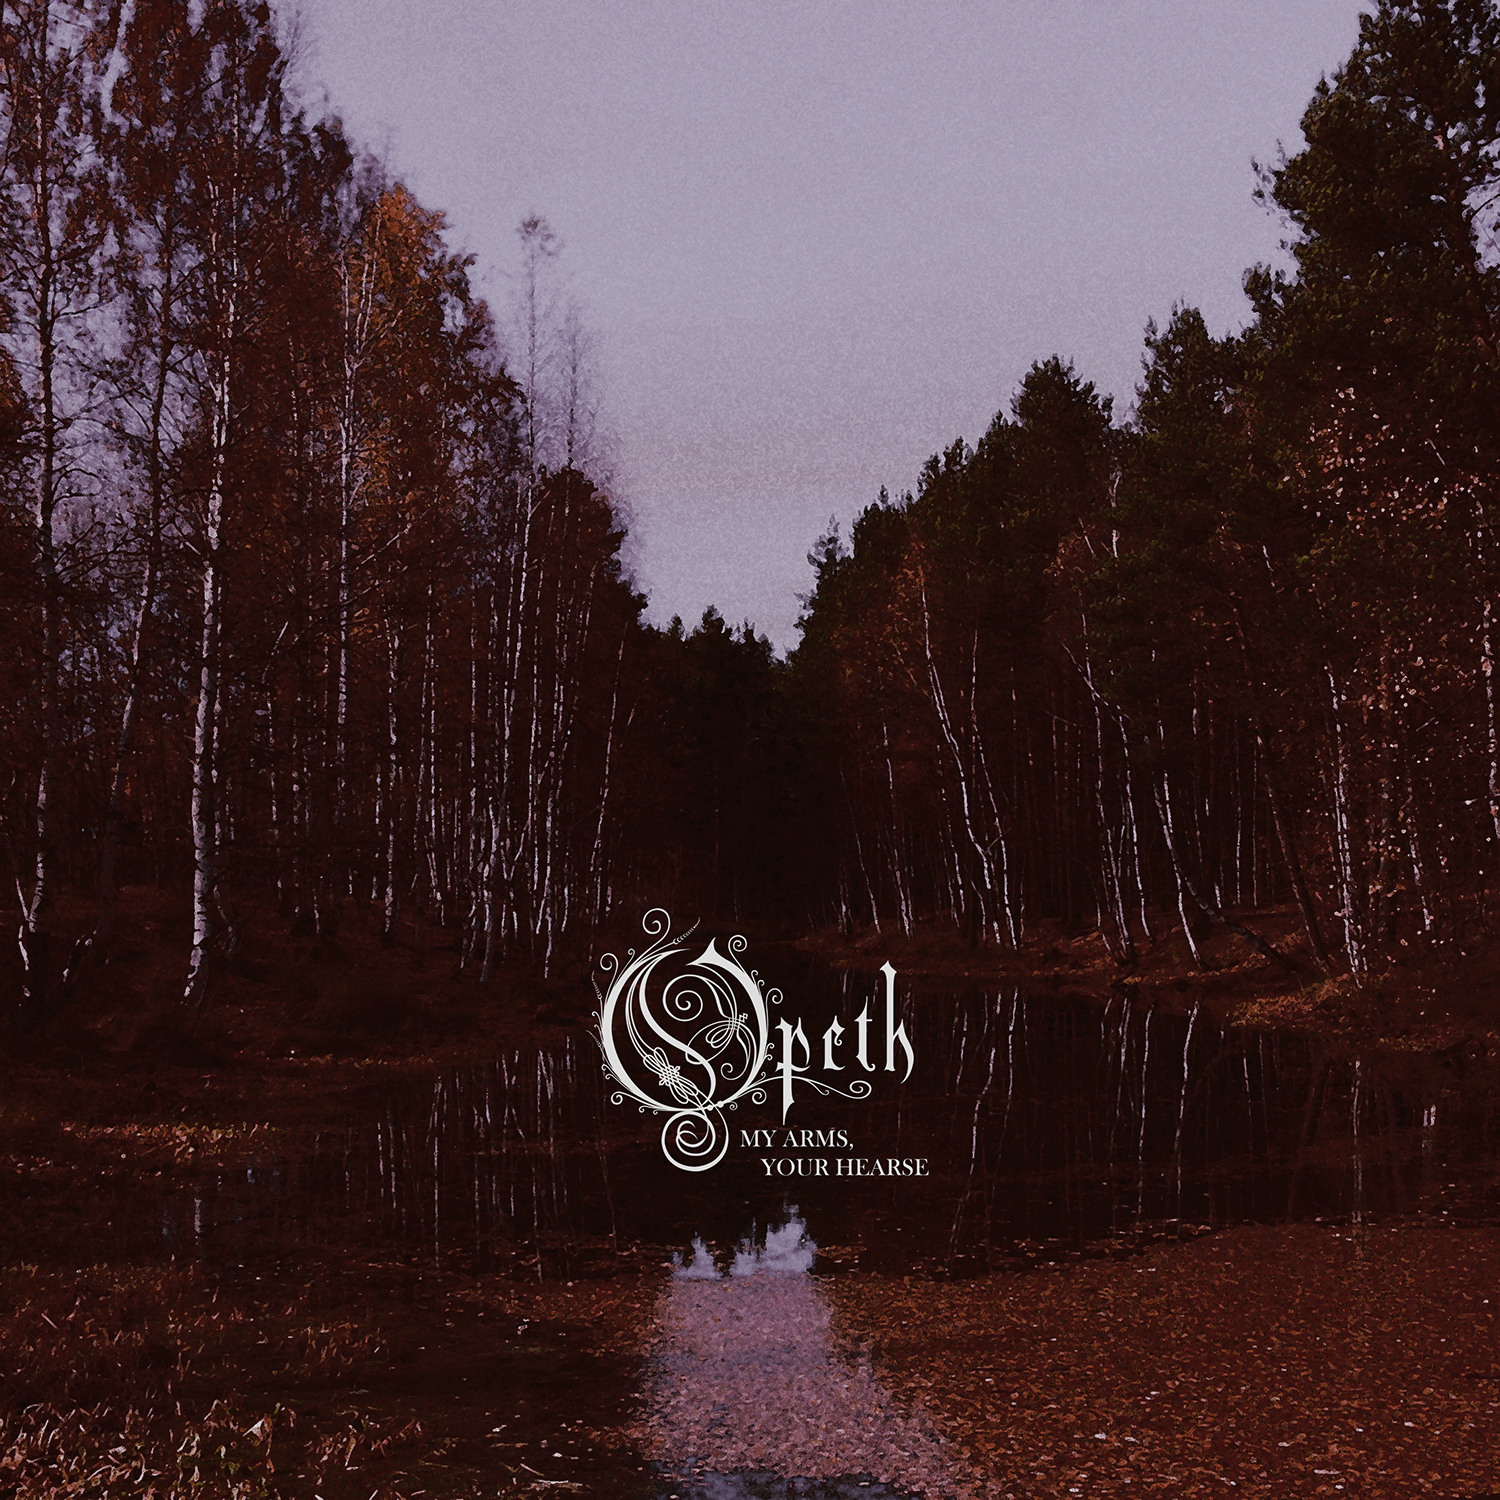 Opeth - My Arms, Your Hearse #2 [Remake] by StygianSaviour on DeviantArt